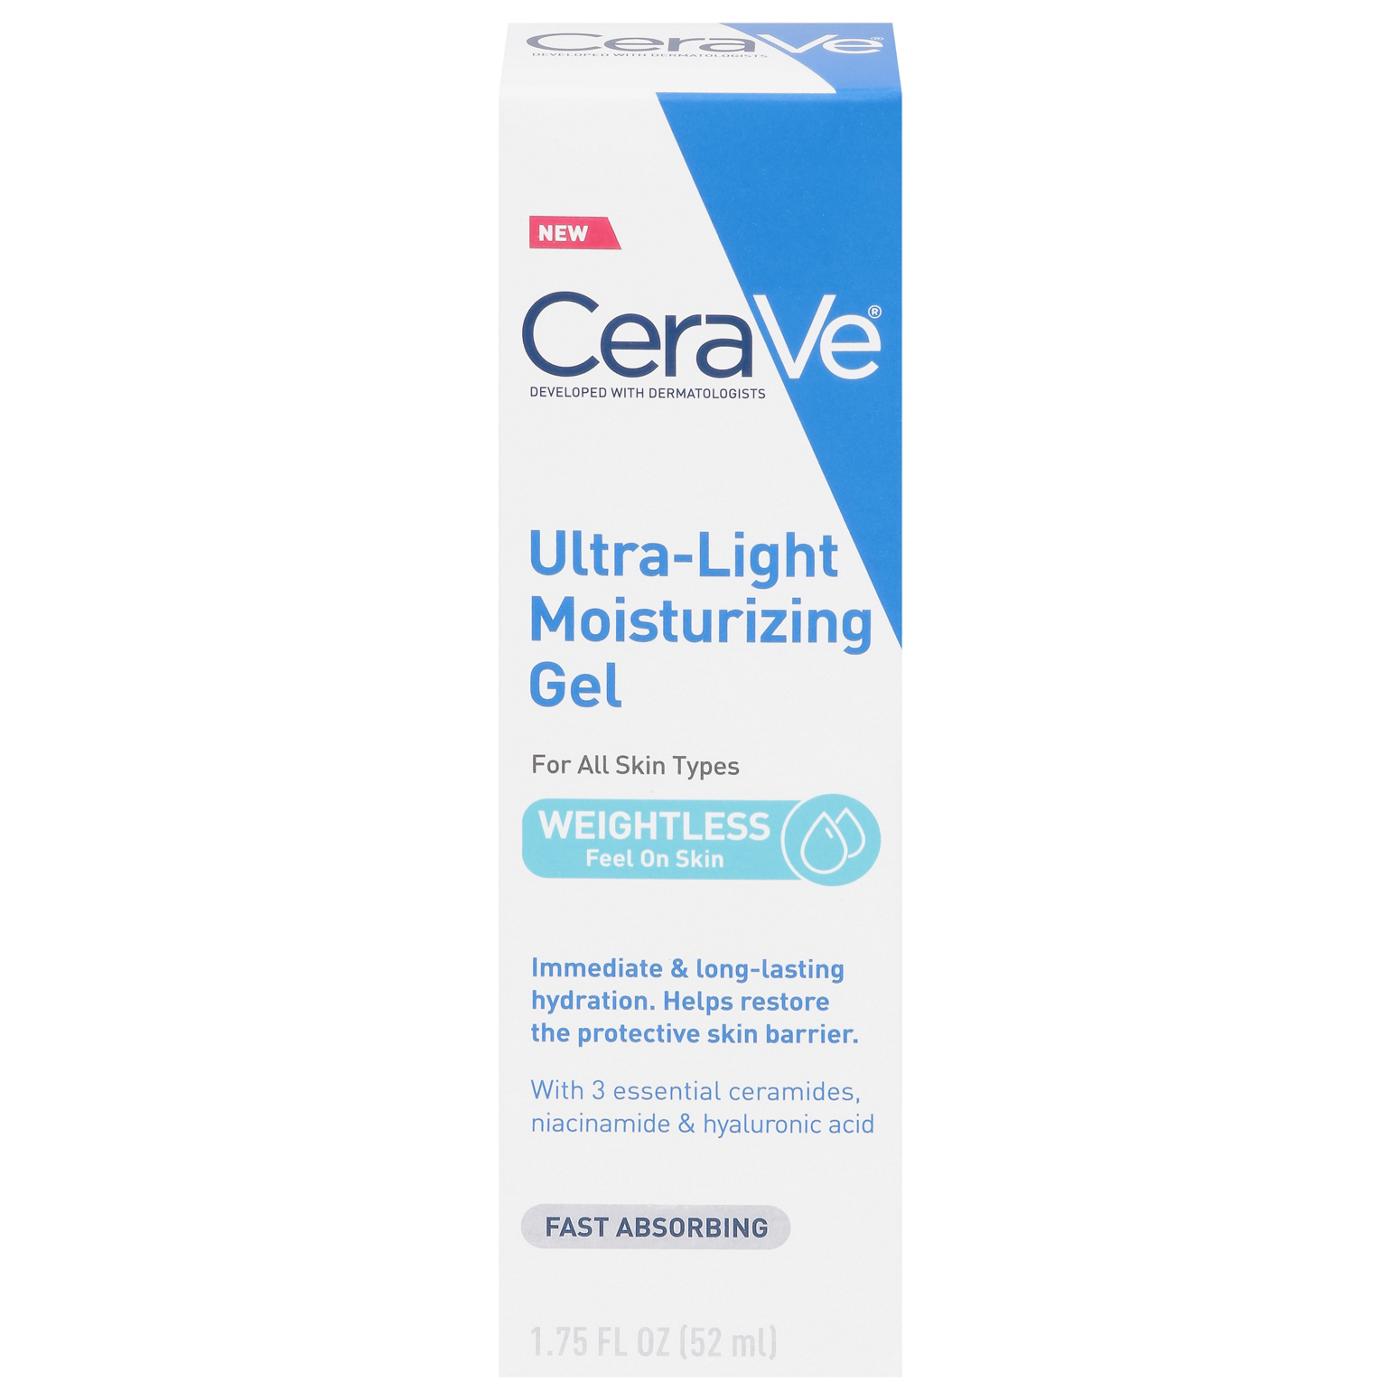 CeraVe Ultra-Light Moisturizing Gel; image 1 of 3